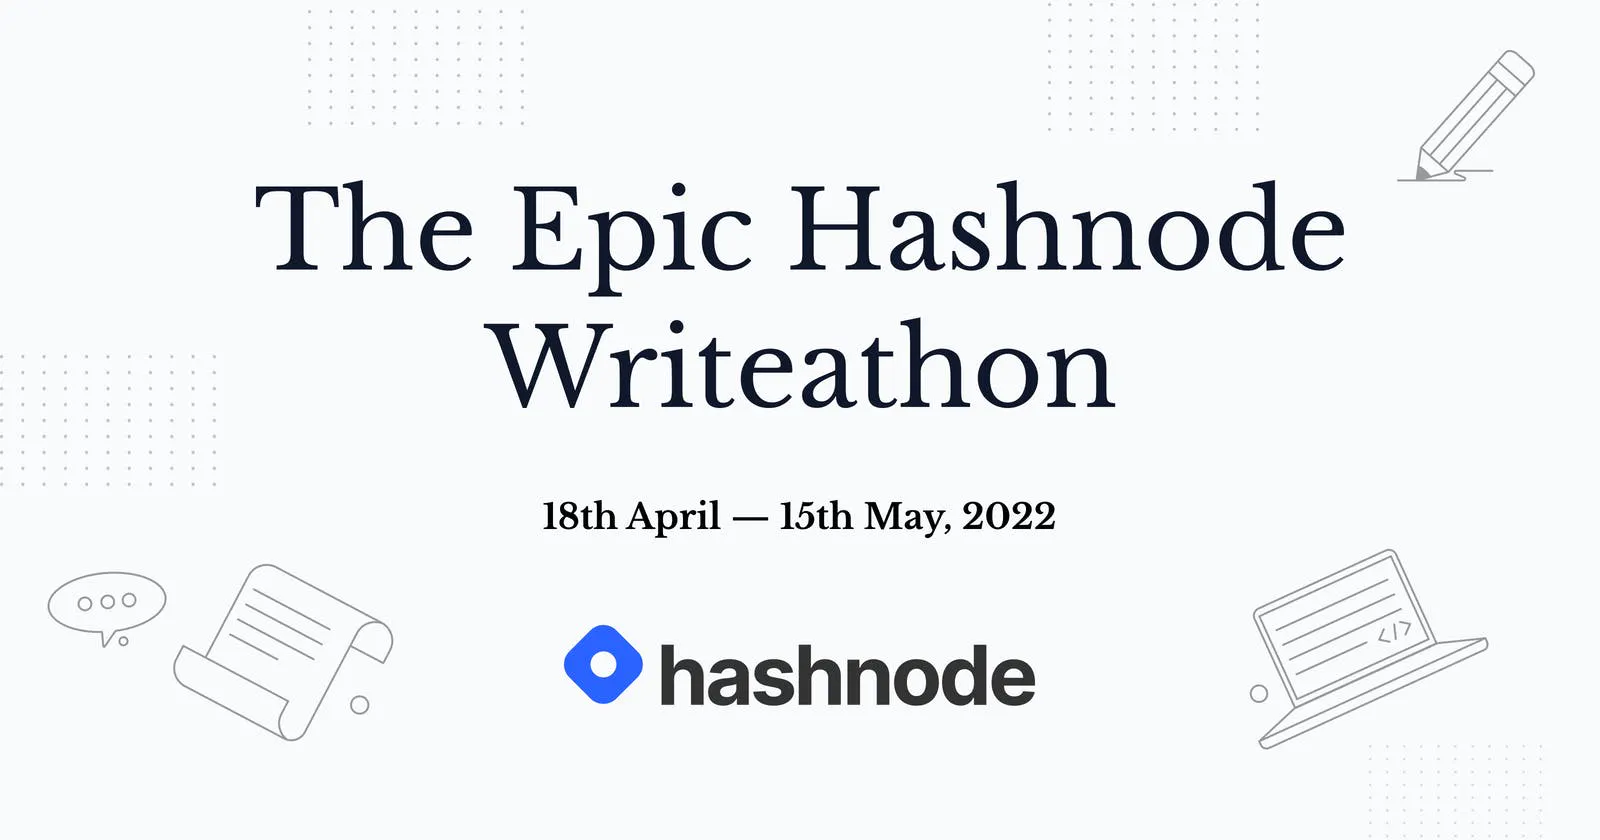 The Epic Hashnode Writeathon